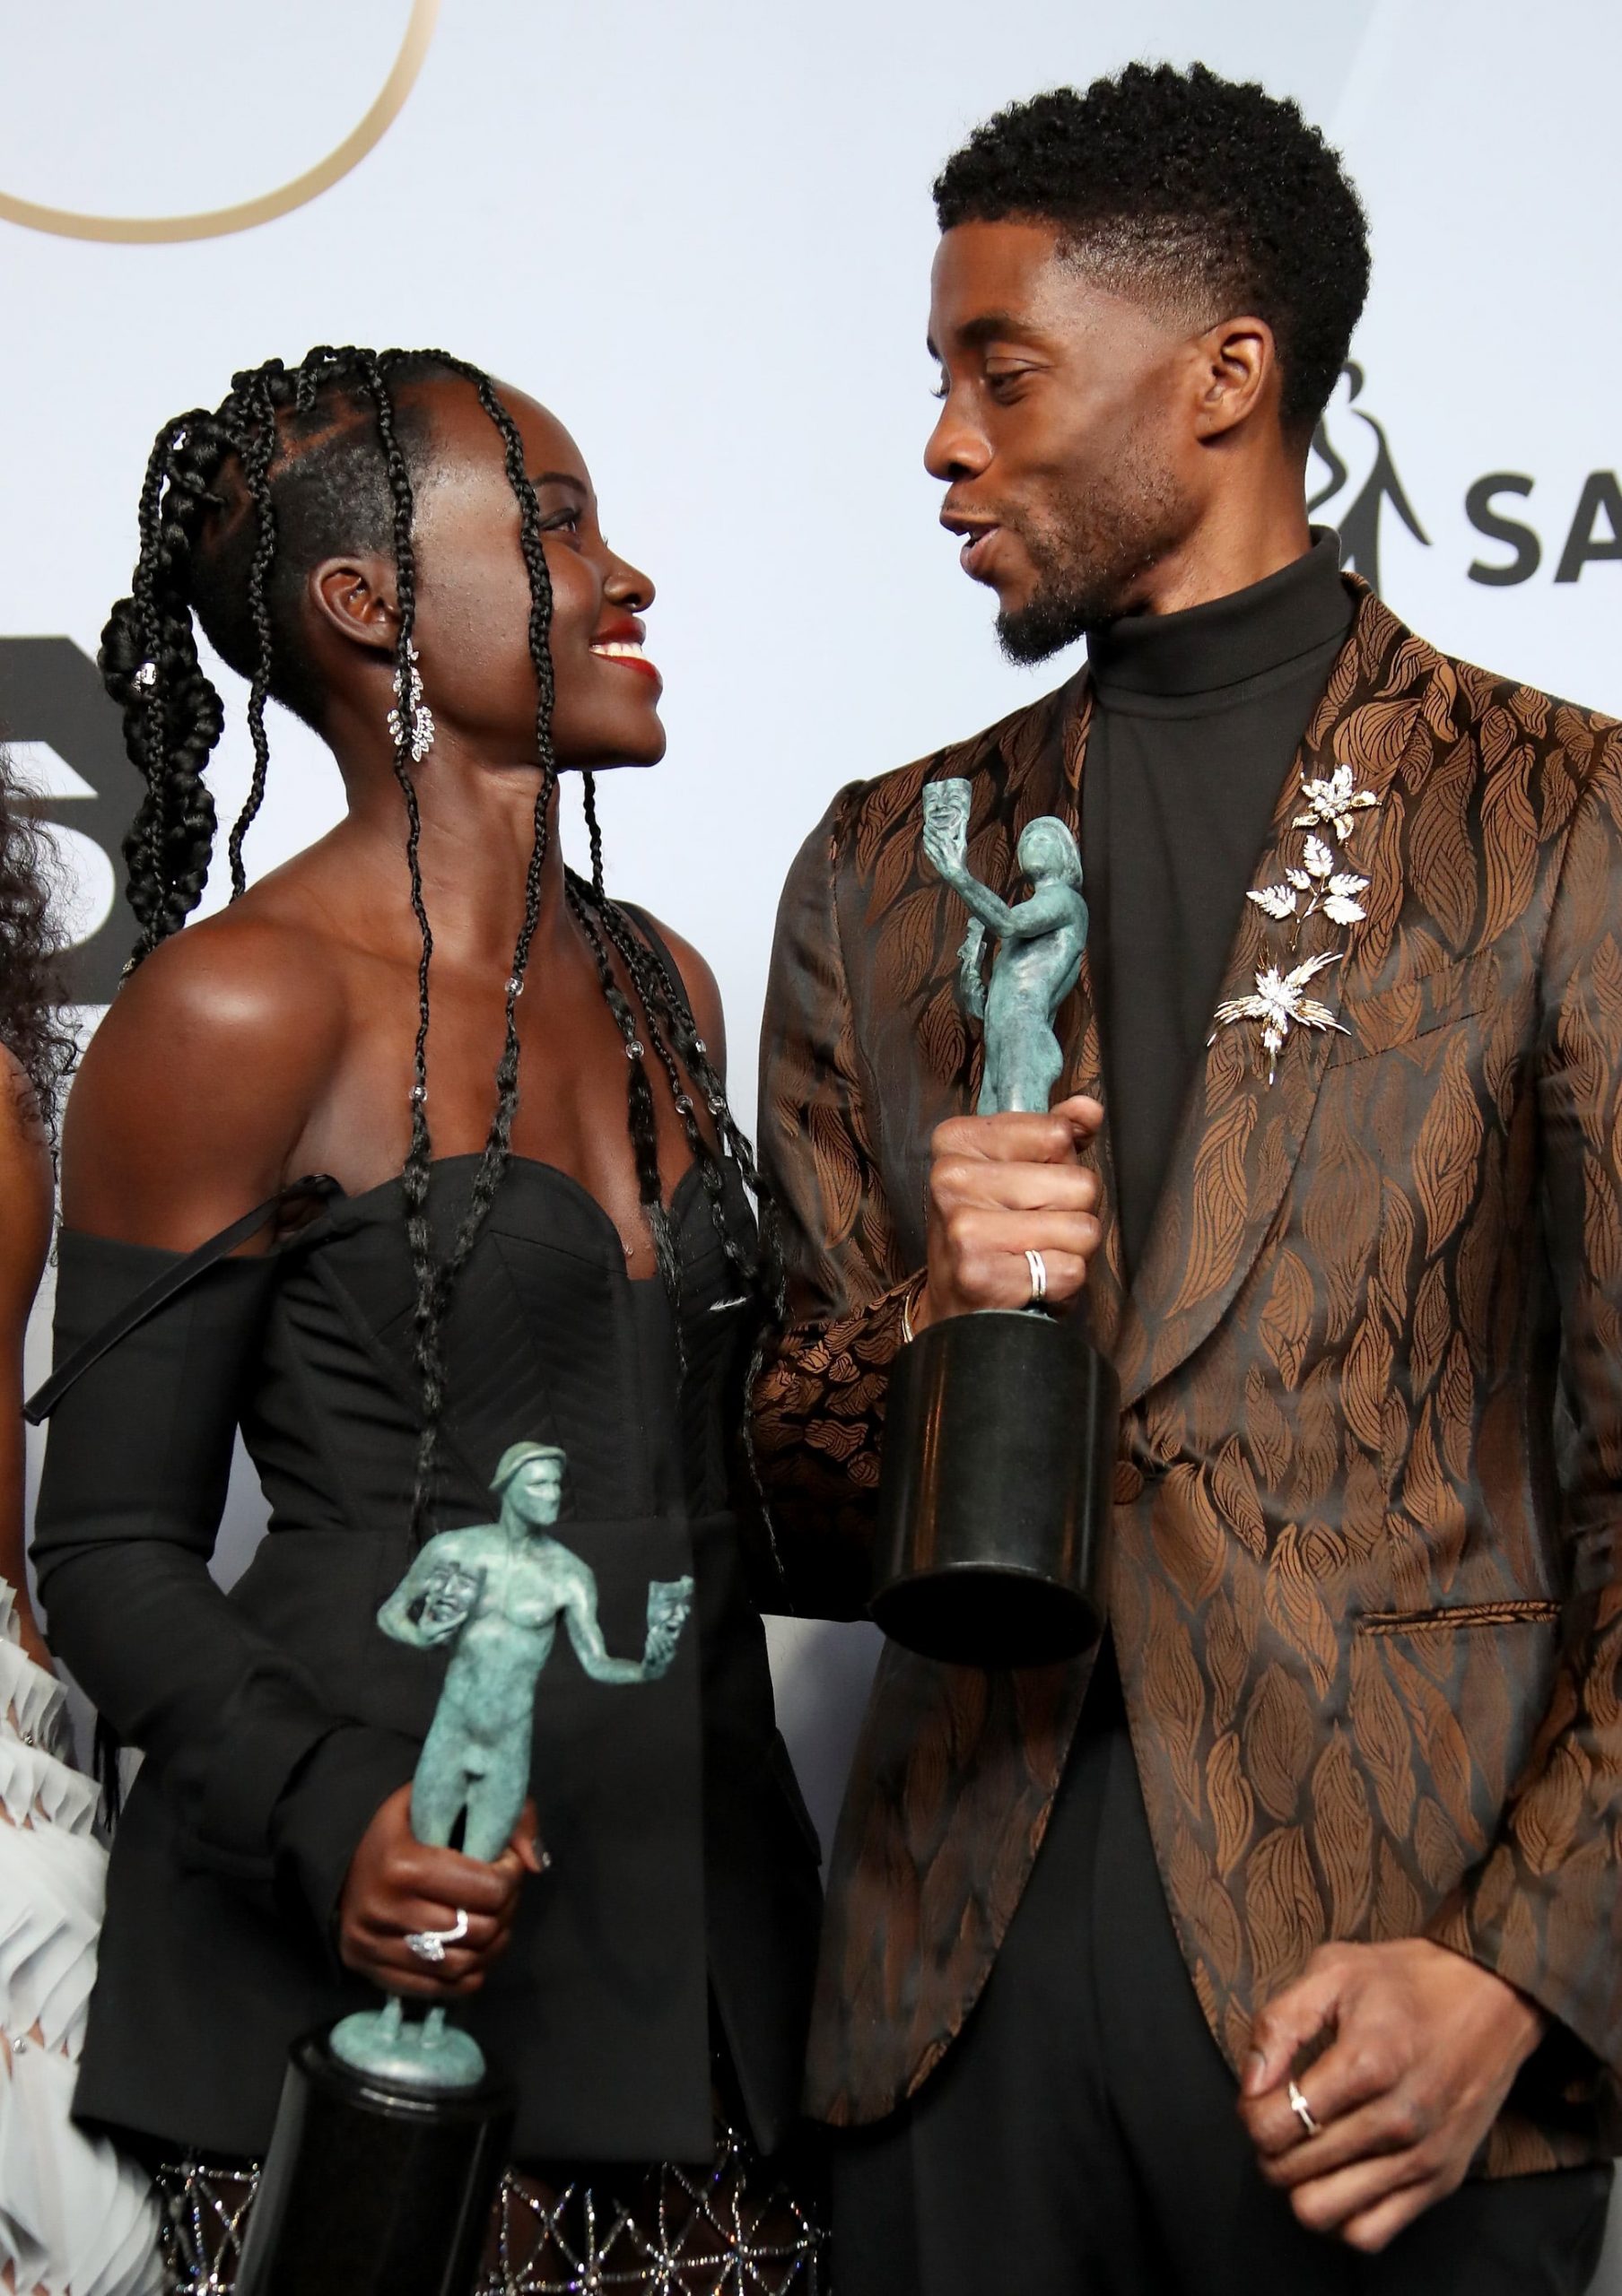 Lupita Nyong’o Honors Chadwick Boseman’s “Immortal Energy” in Powerful Written Tribute